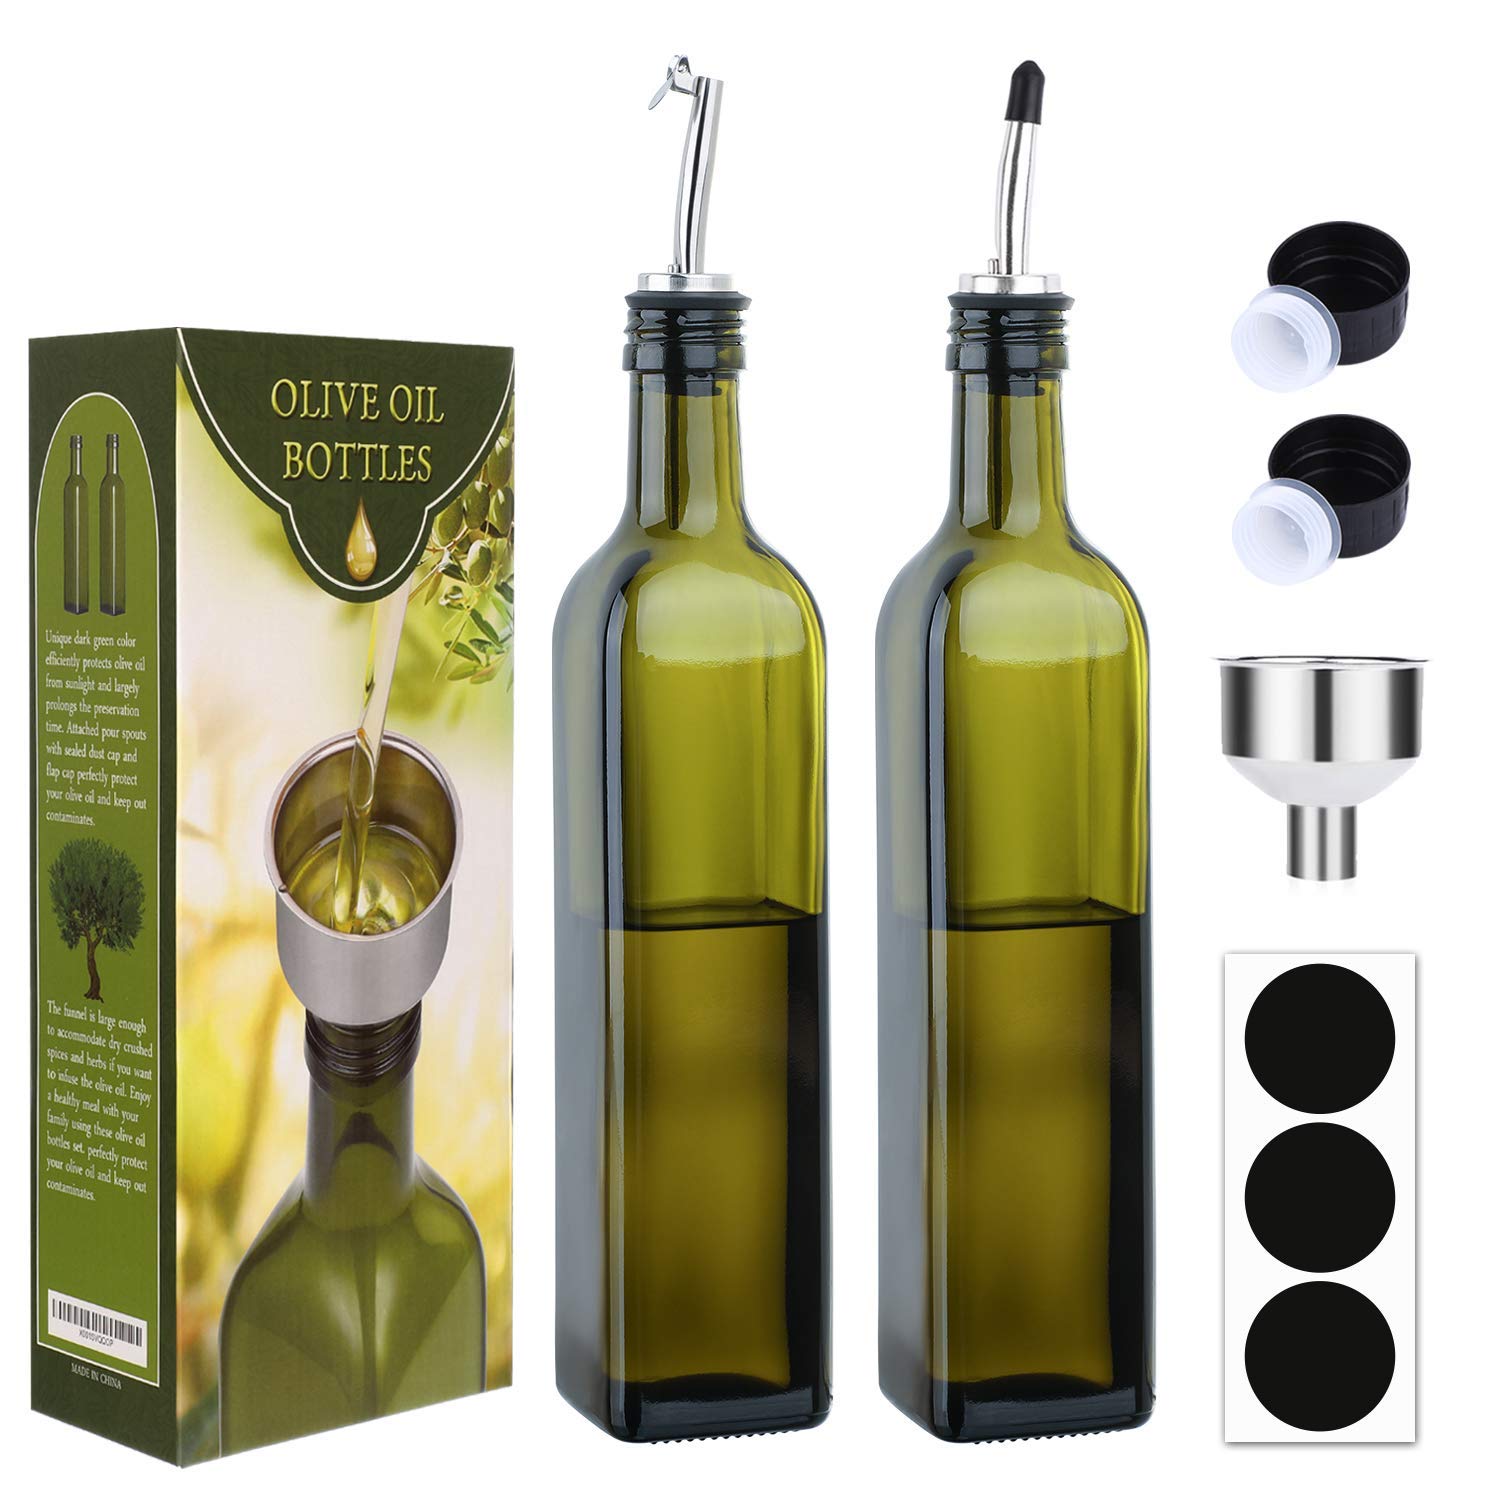 [2 PACK]Aozita 17oz Glass Olive Oil Bottle Set - 500ml ...